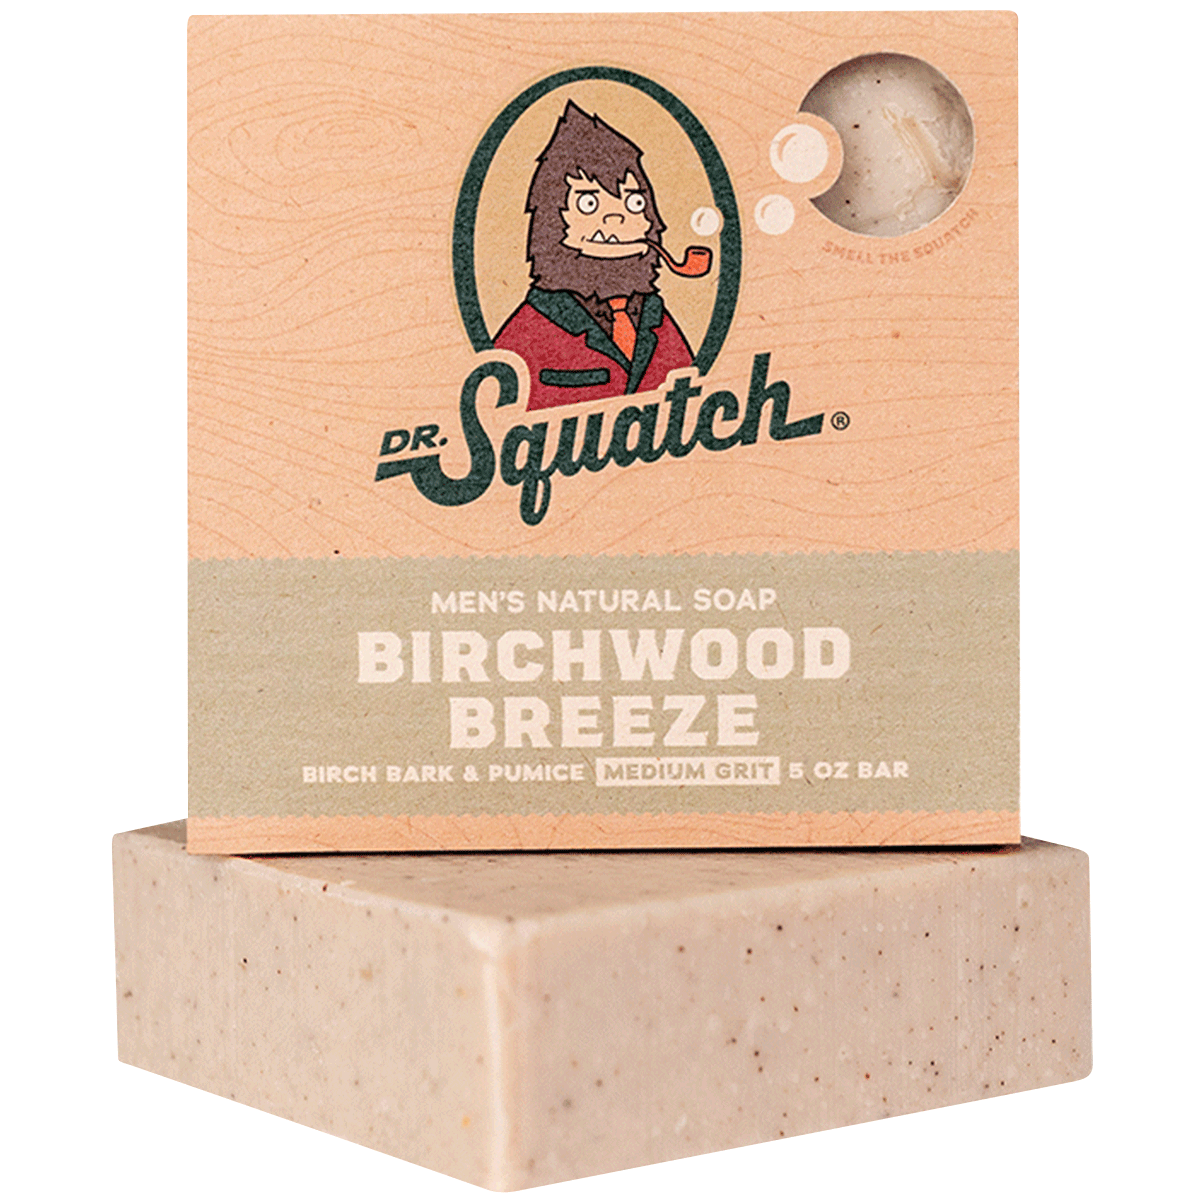 DR. SQUATCH BAR SOAP - BIRCHWOOD BREEZE